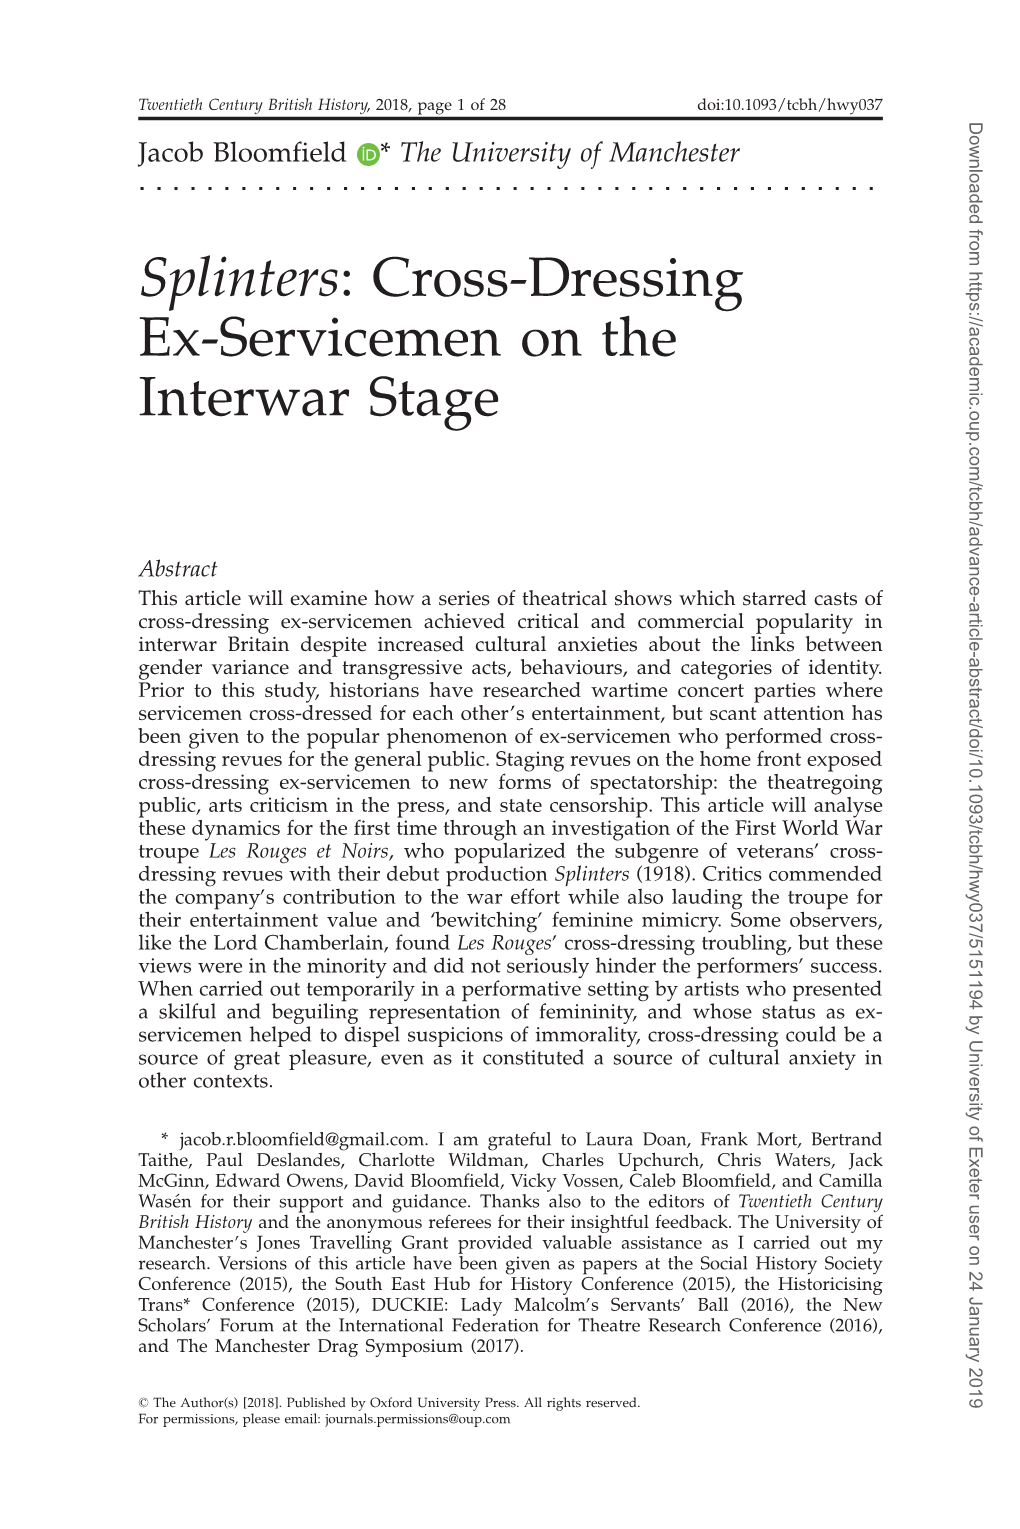 Splinters: Cross-Dressing Ex-Servicemen on the Interwar Stage